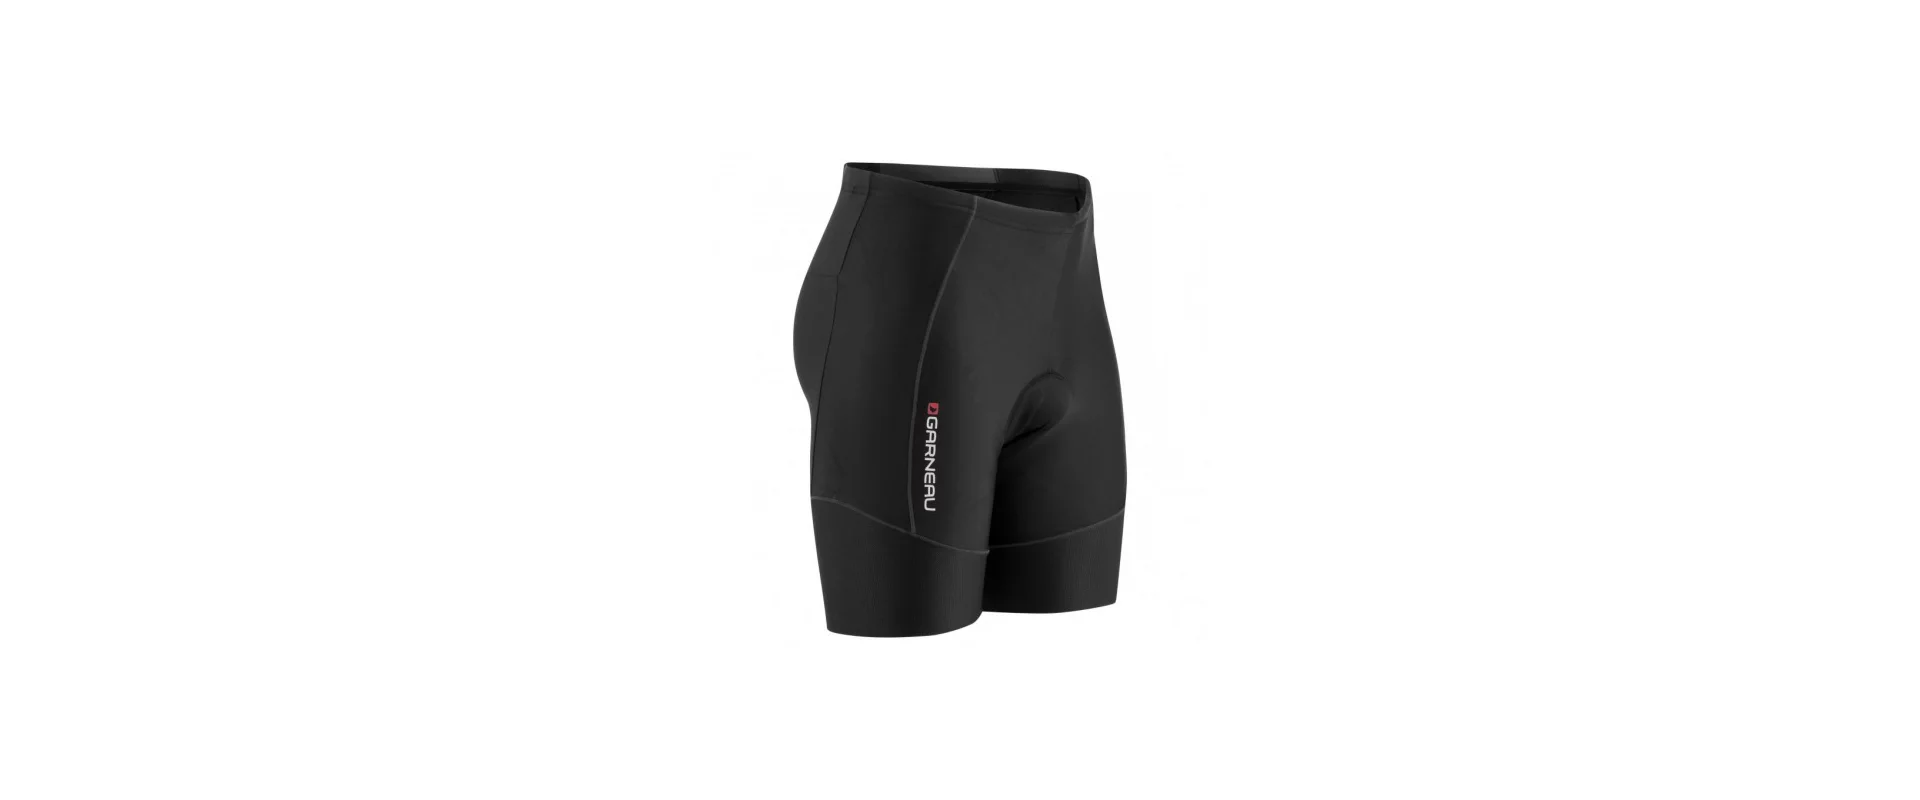 Louis Garneau Tri Power Lazer Tri Shorts / Мужские стартовые шорты фото 1